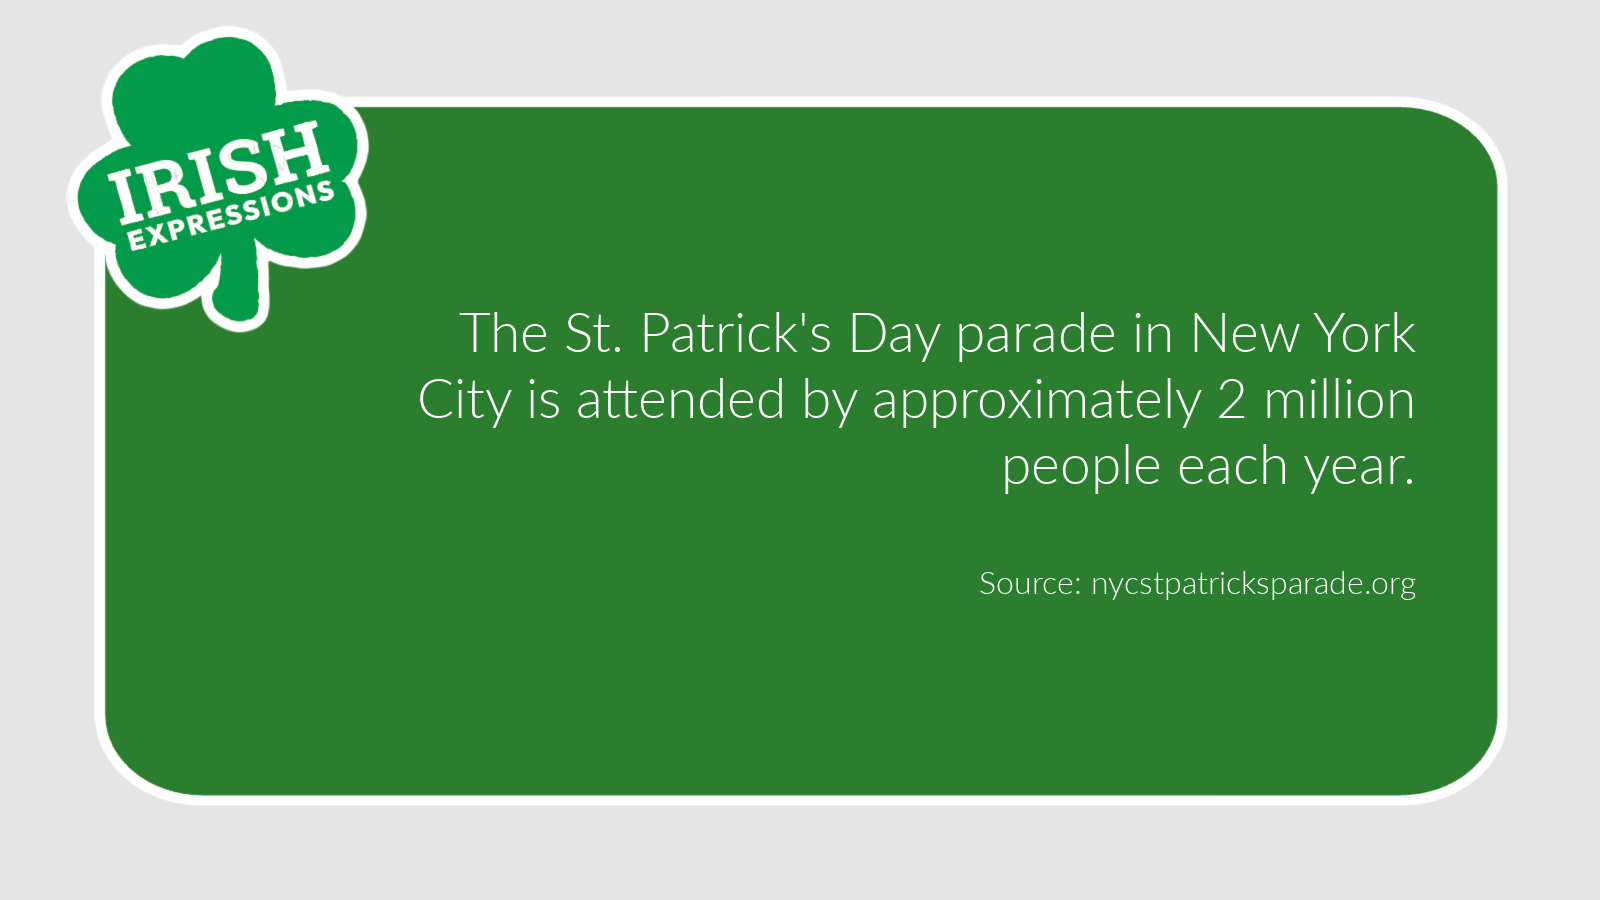 Irish Expressions - St Patrick's Day trivia. 2 million spectators per year at NYC St Patrick's Day parade.